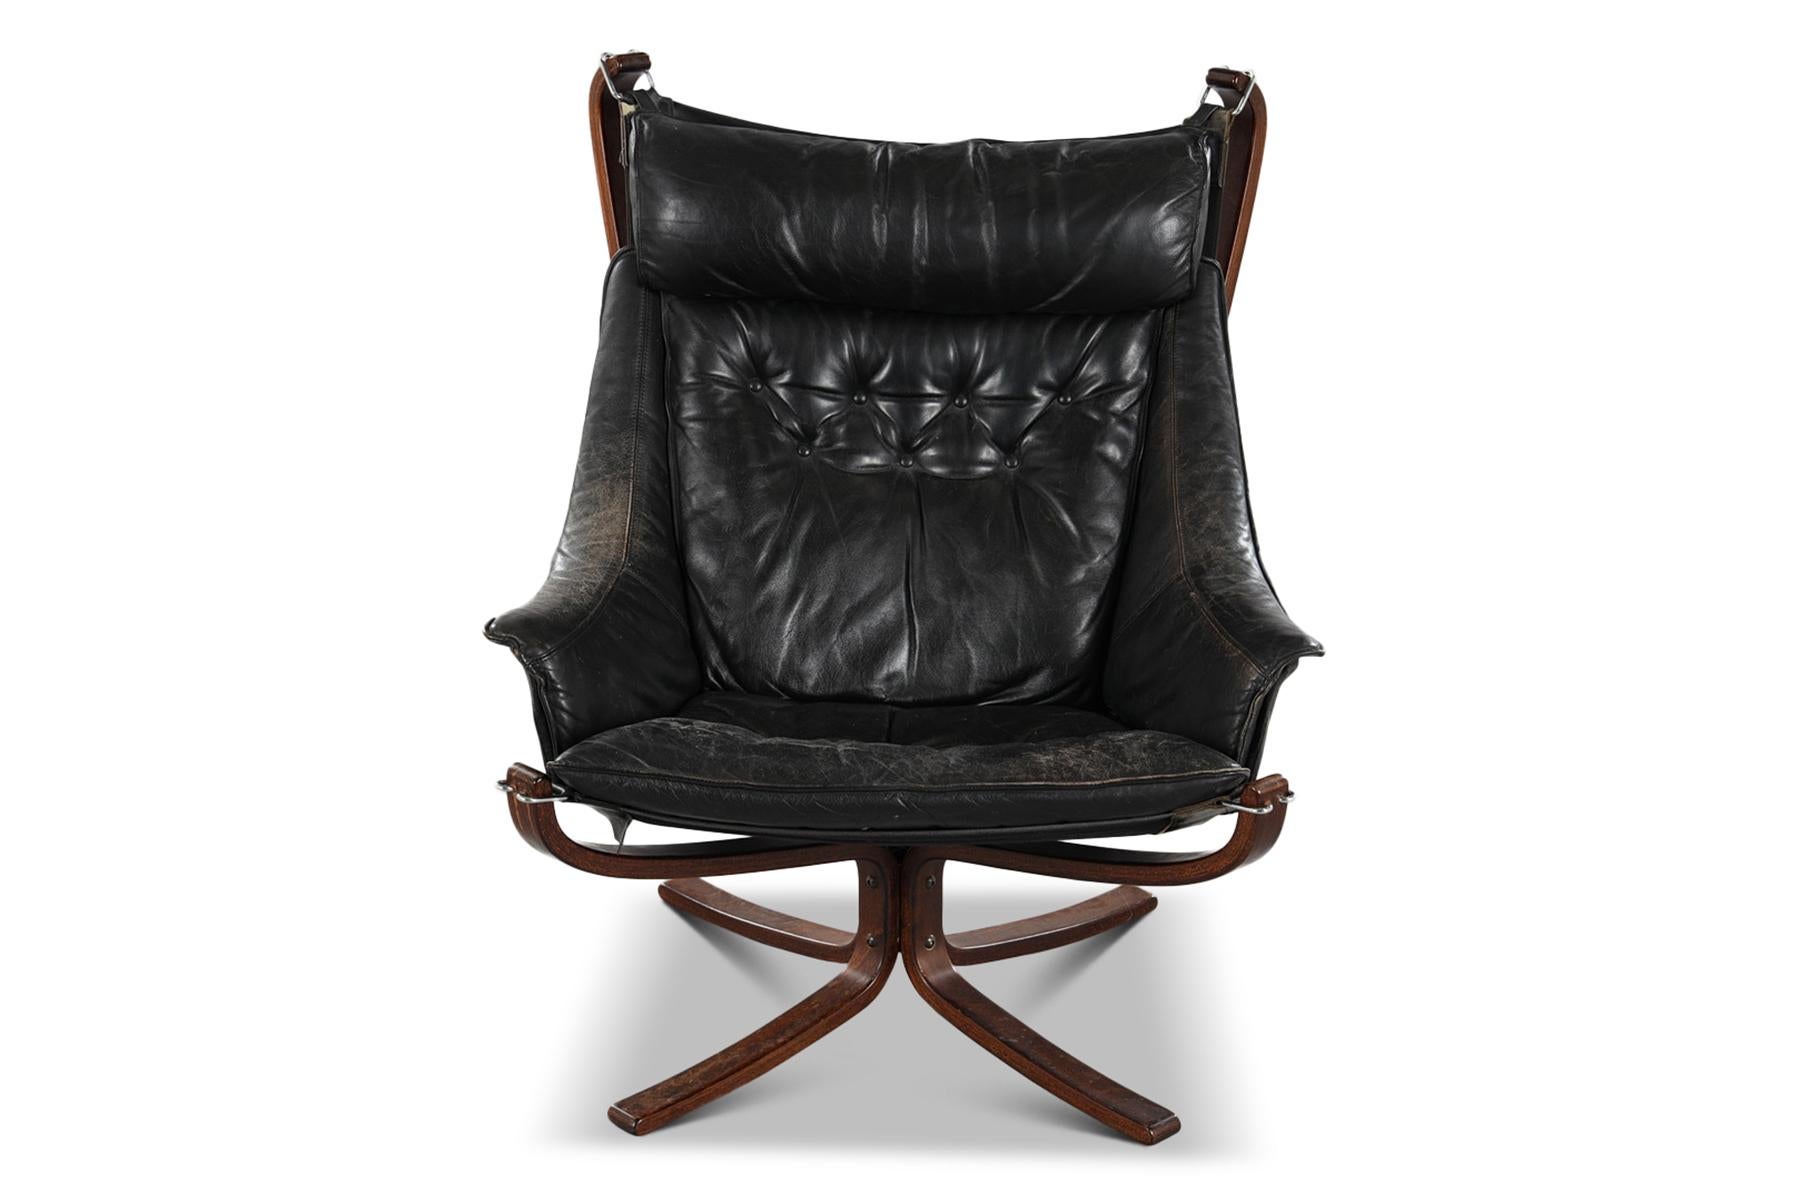 Origin: Norway
Designer: Sigurd Ressell
Manufacturer: Vatne Møbler
Era: 1960s
Materials: Leather, Bent Beech
Measurements: 33″ wide x 32″ deep x 39.5″ tall
Seat Height: 18″ tall

Condition: In excellent original condition.